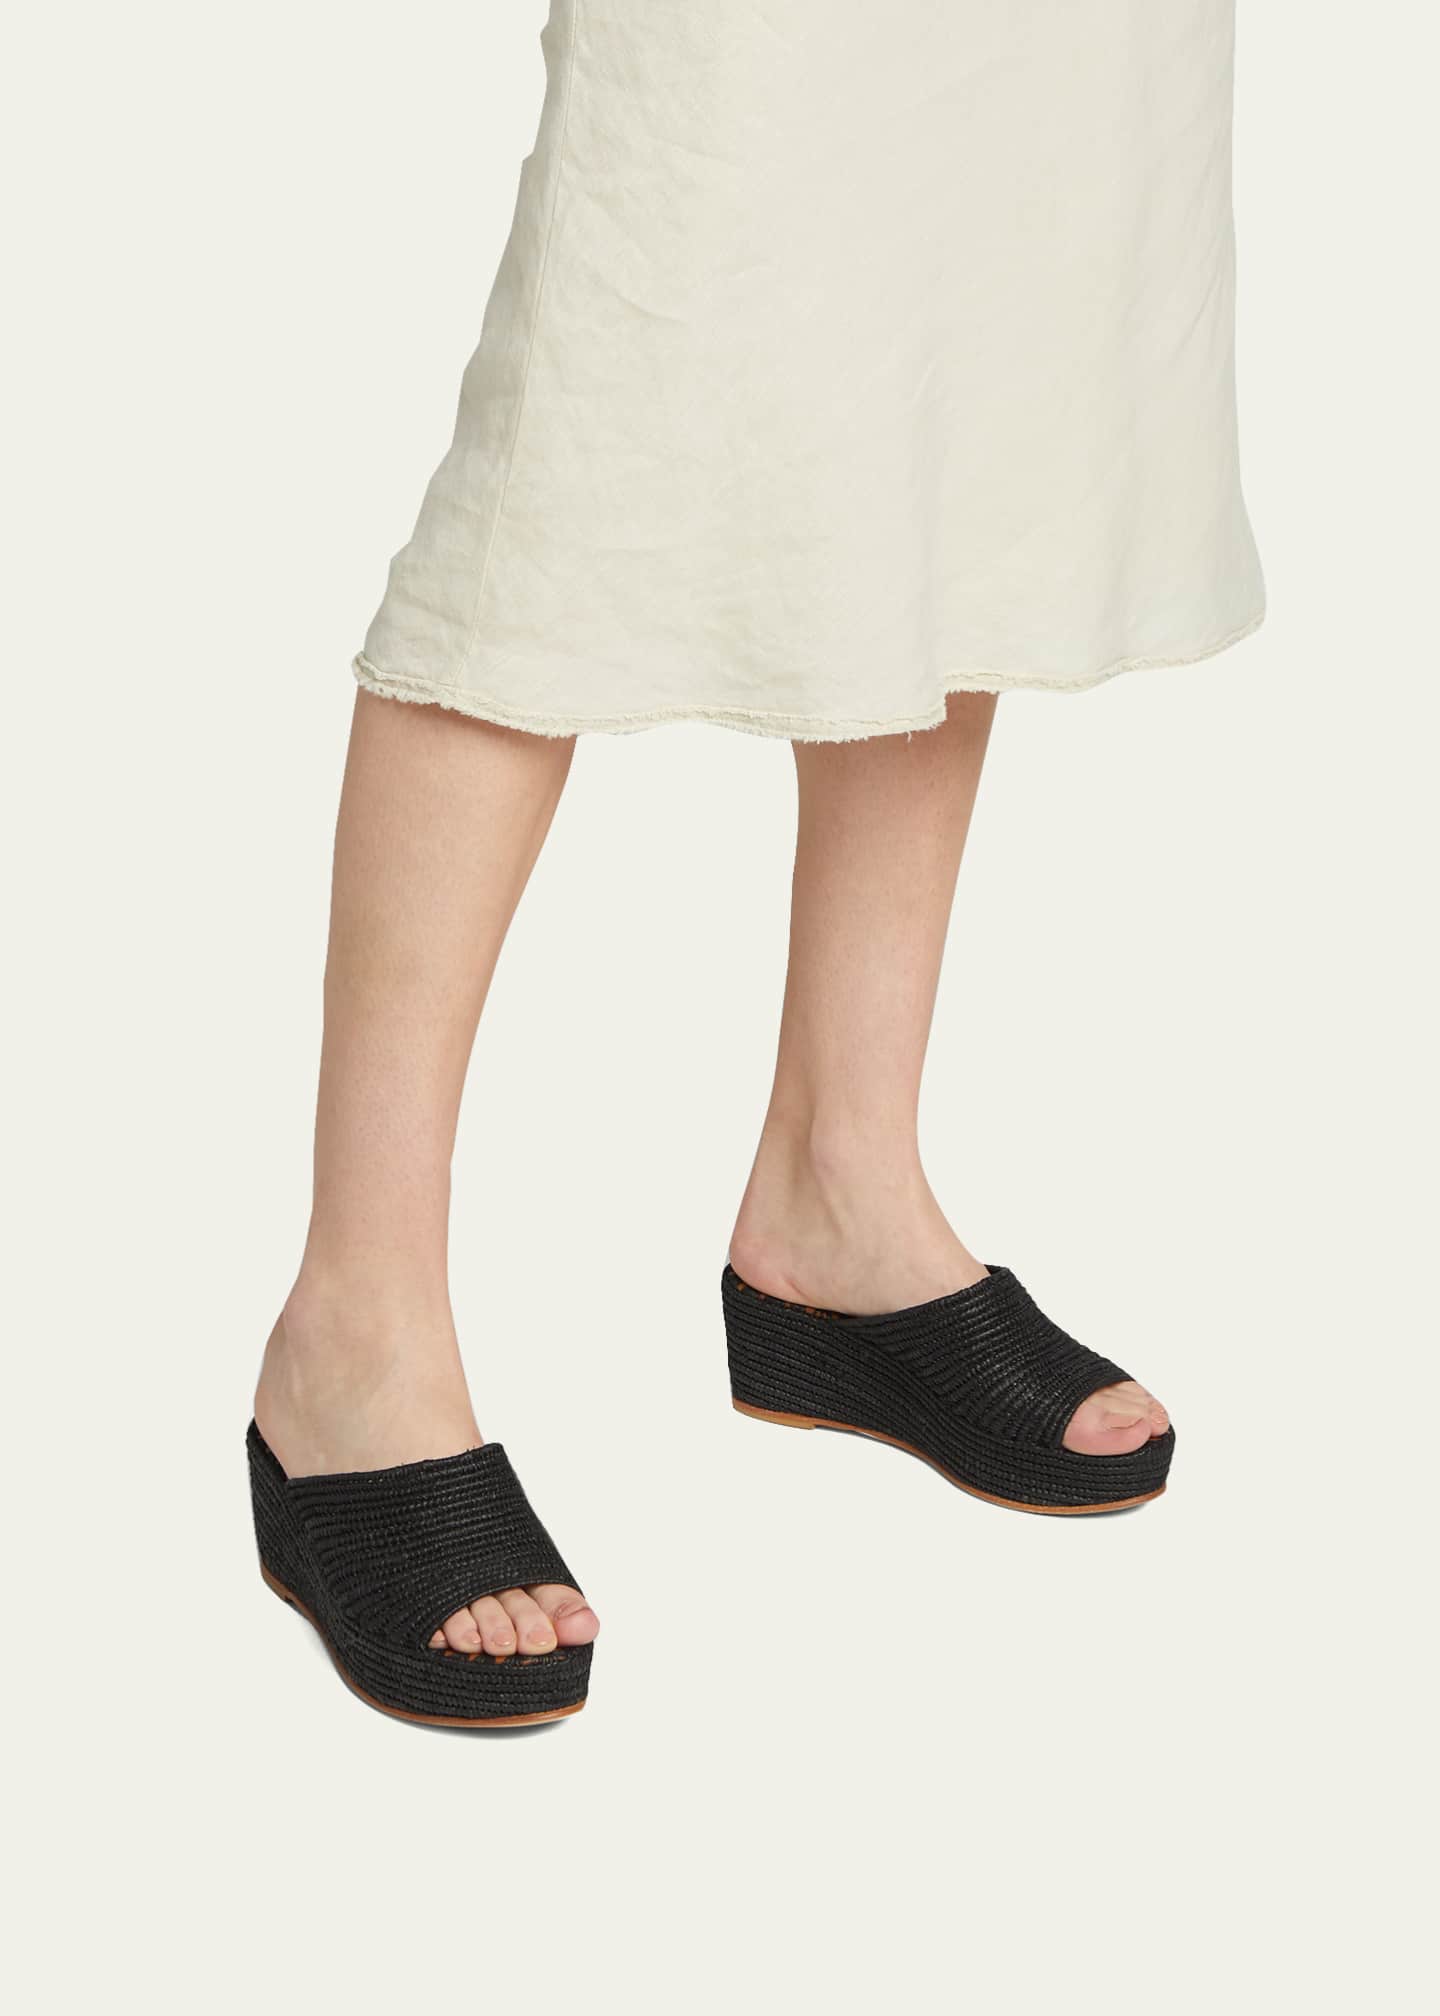 Carrie Forbes Karim Woven Raffia Wedge Slide Sandals Image 2 of 5